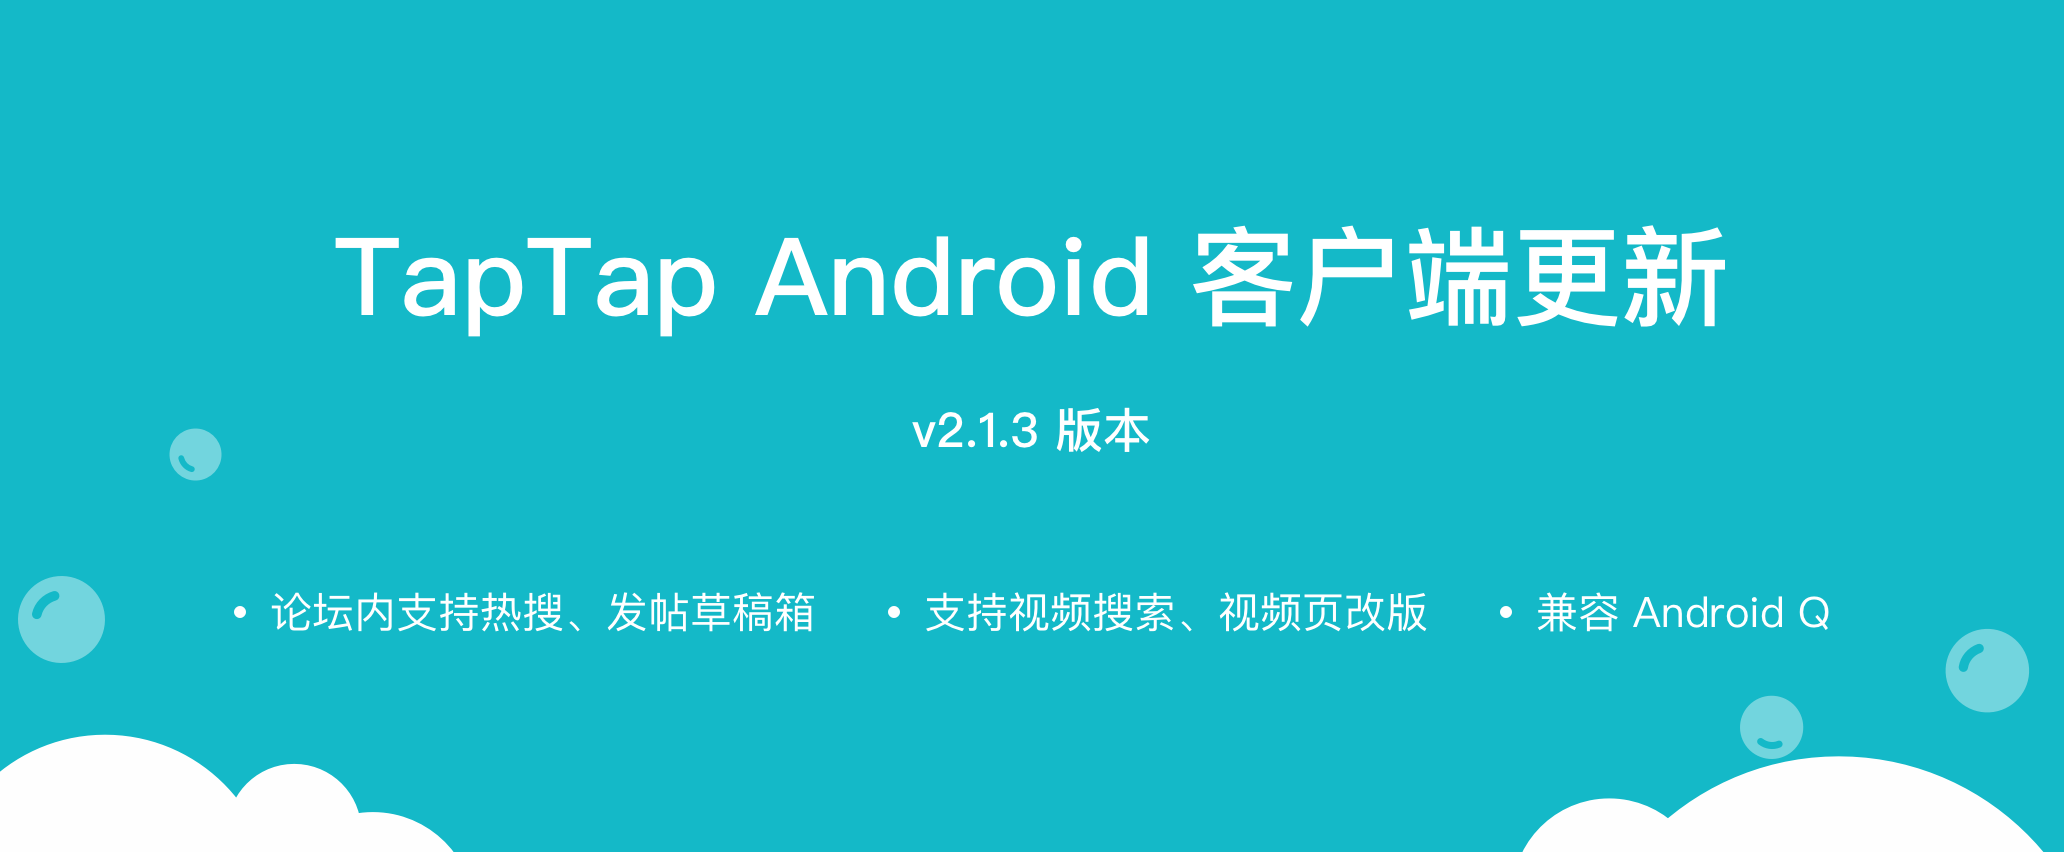 TapTap Android v2.1.3 产品更新